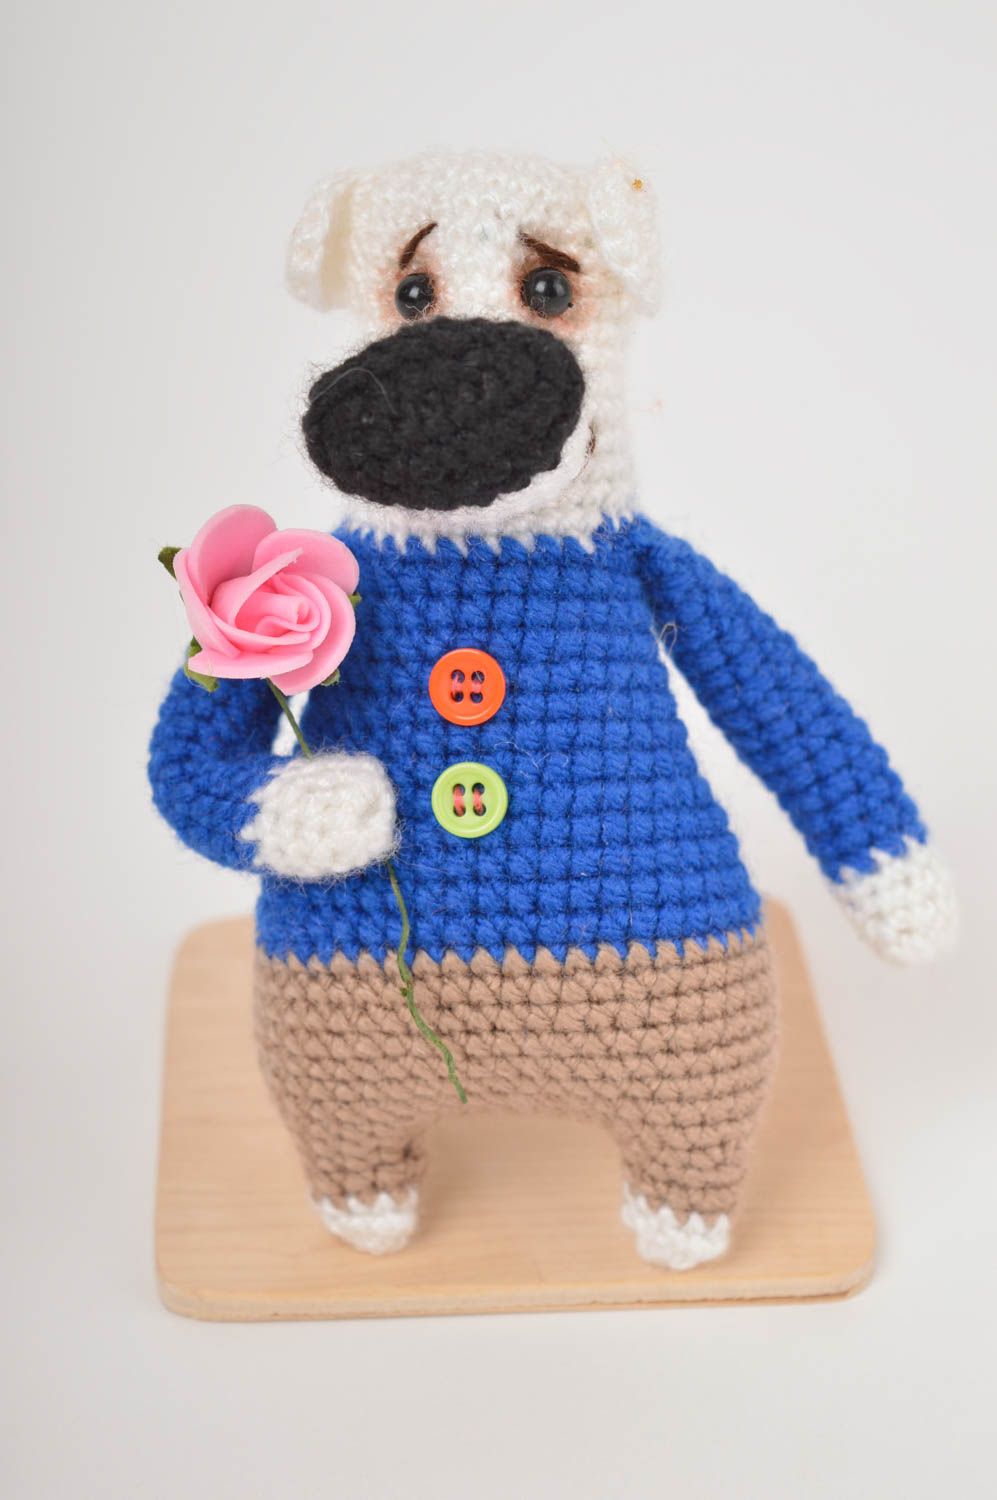 Hand-crocheted bear toy handmade crocheted toy for kids stylish nursery decor photo 2